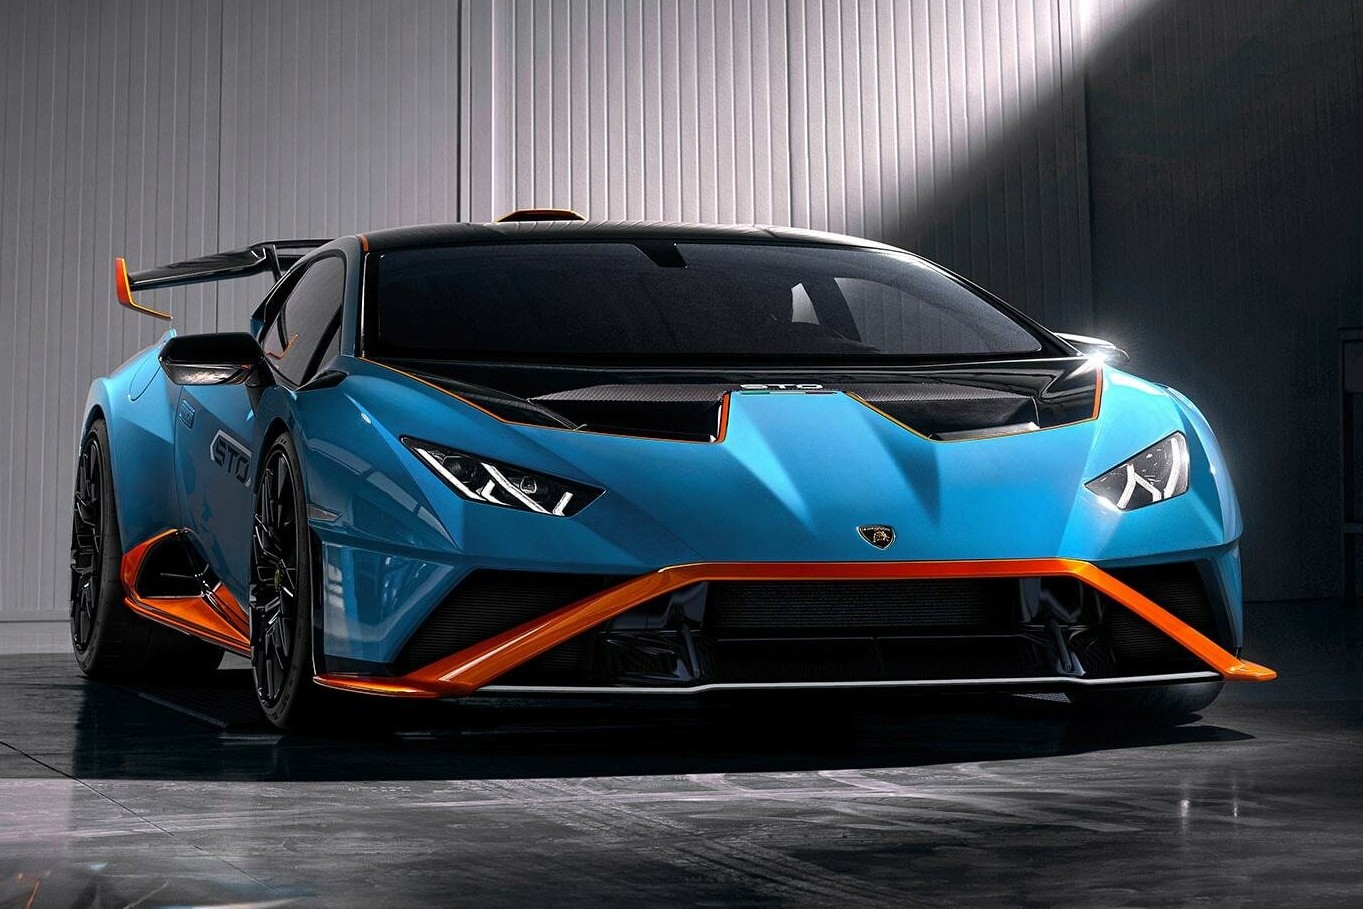 Lamborghini Luxury Cars – All You Need To Know